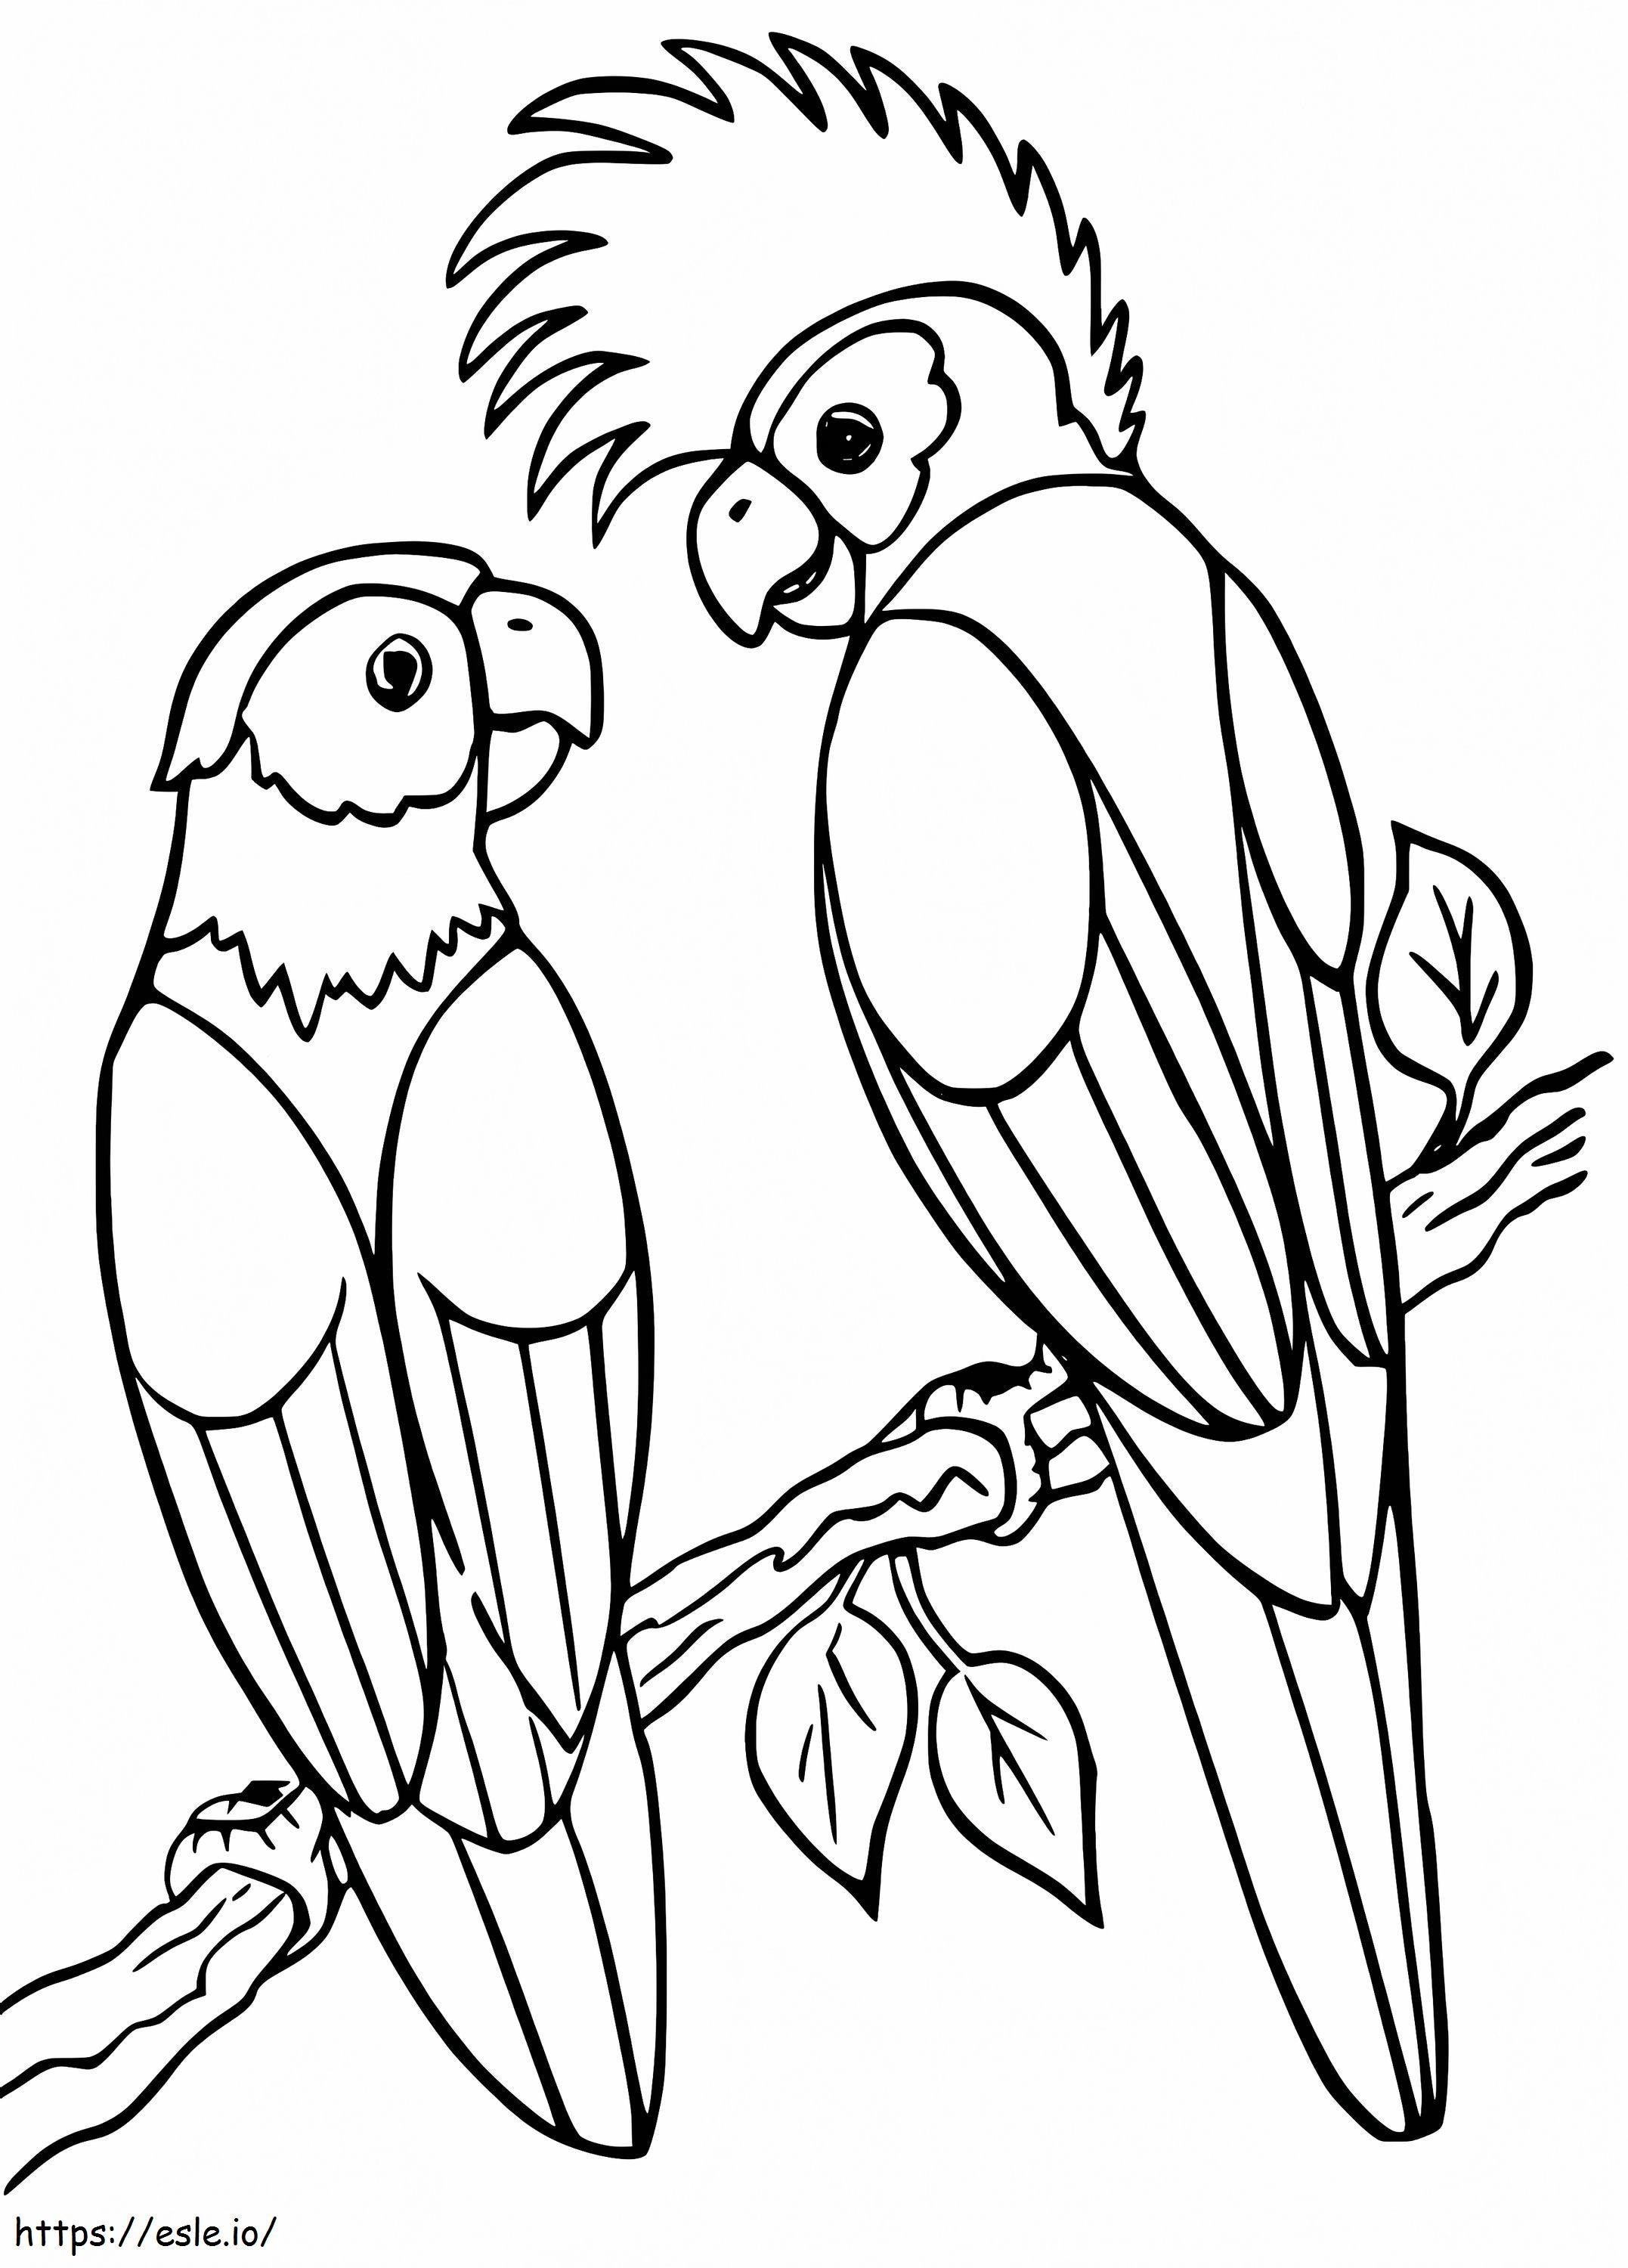 Nimfa i papuga kolorowanka